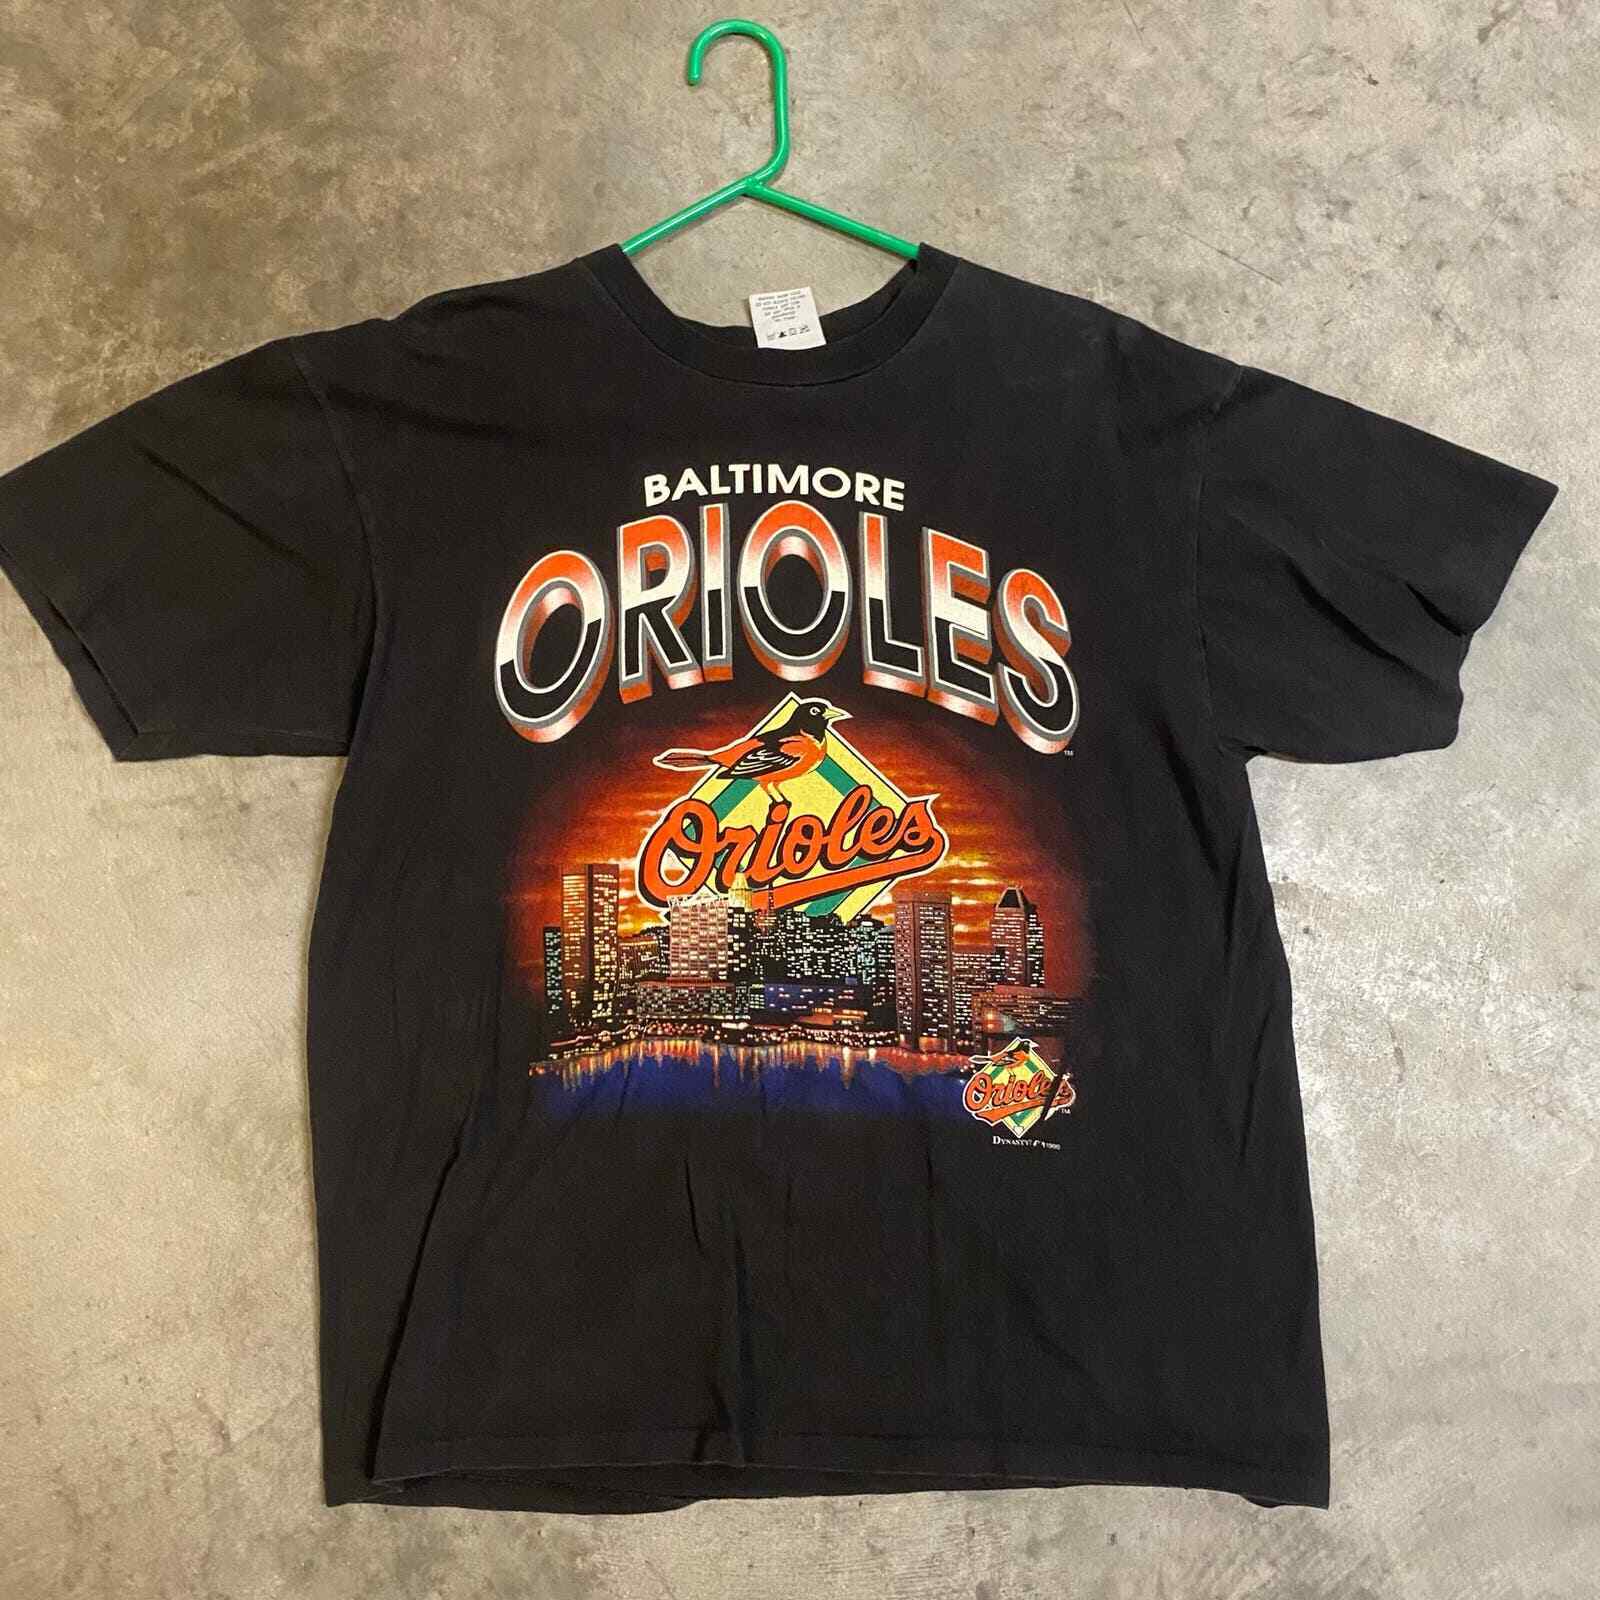 Vintage 1990 Baltimore Orioles T-shirt - image 1